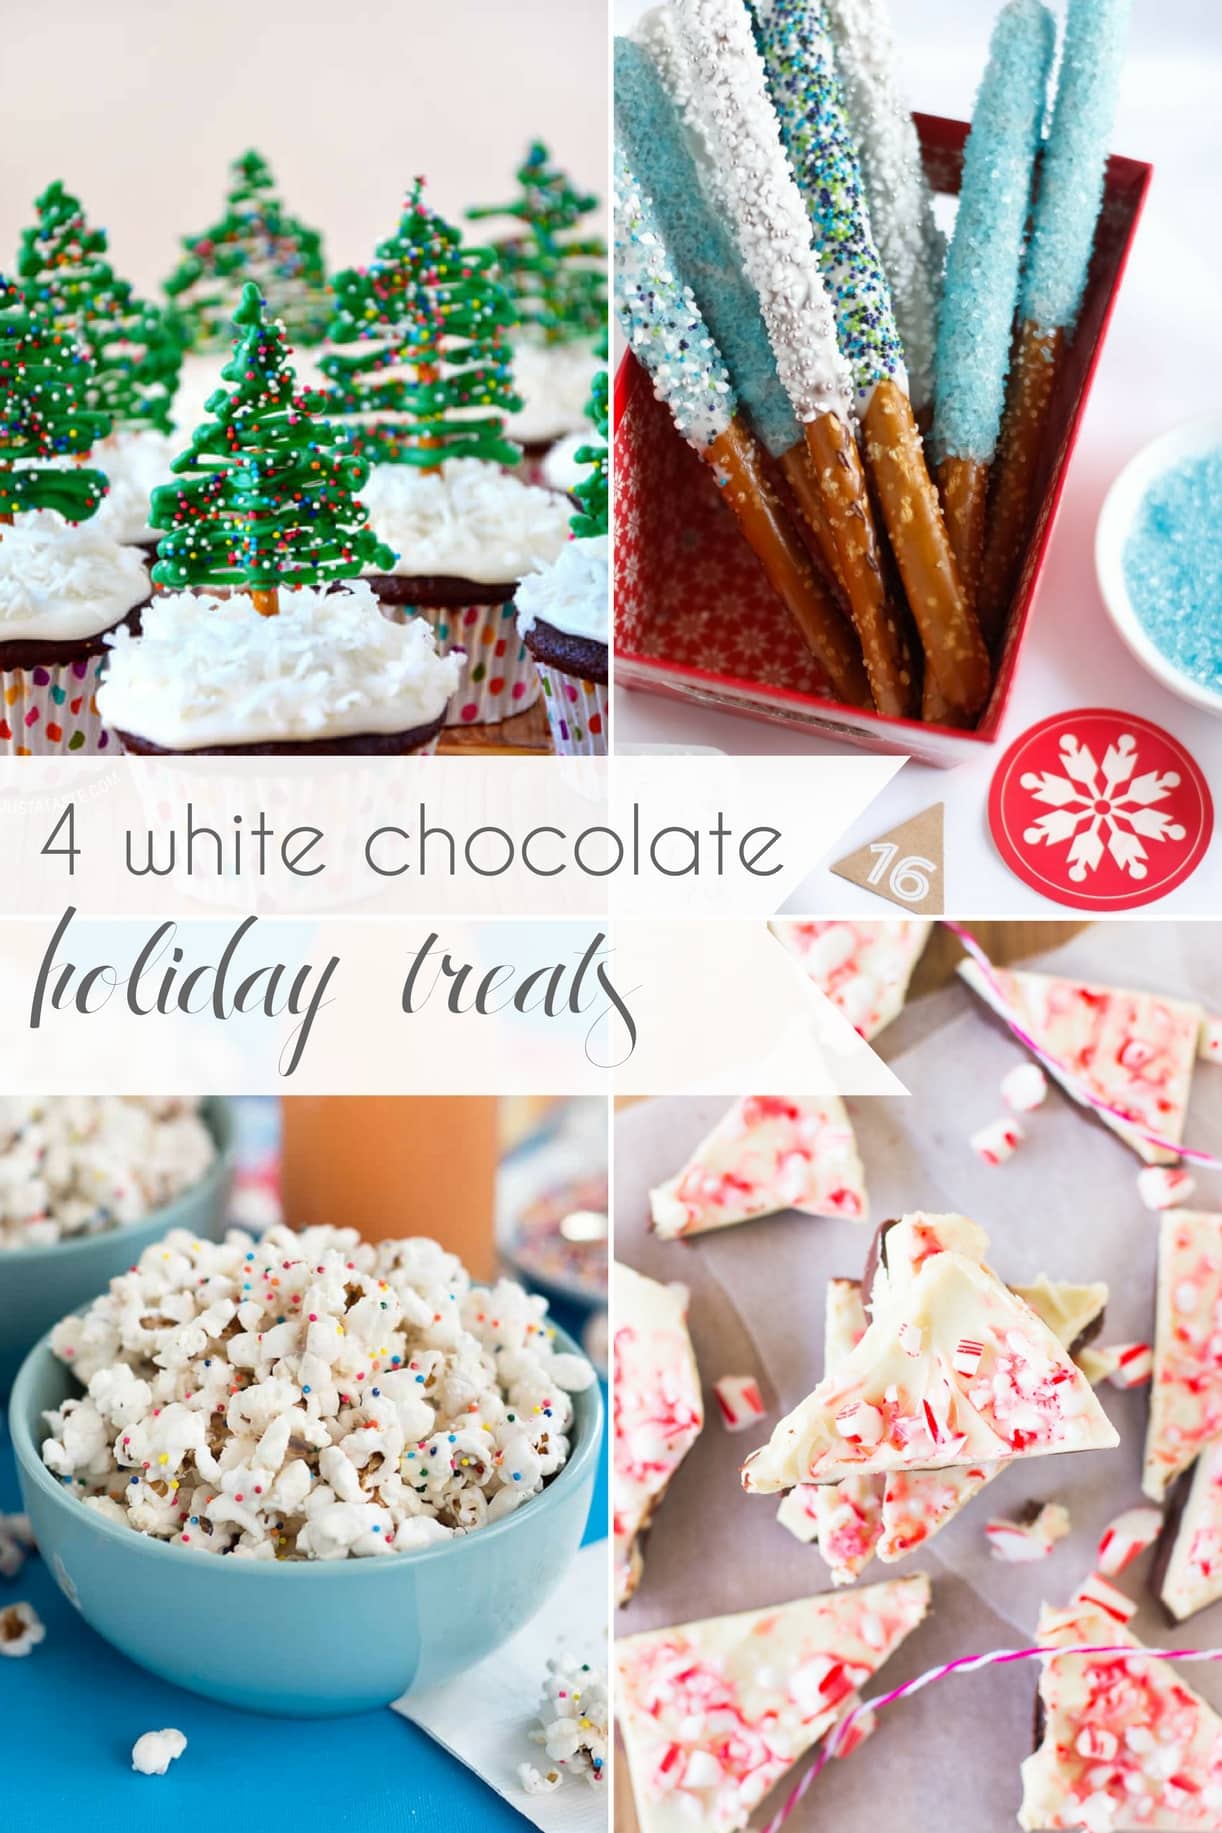 White Chocolate Holiday Treats DIY as seen on Hill City Bride Virginia Wedding Blog